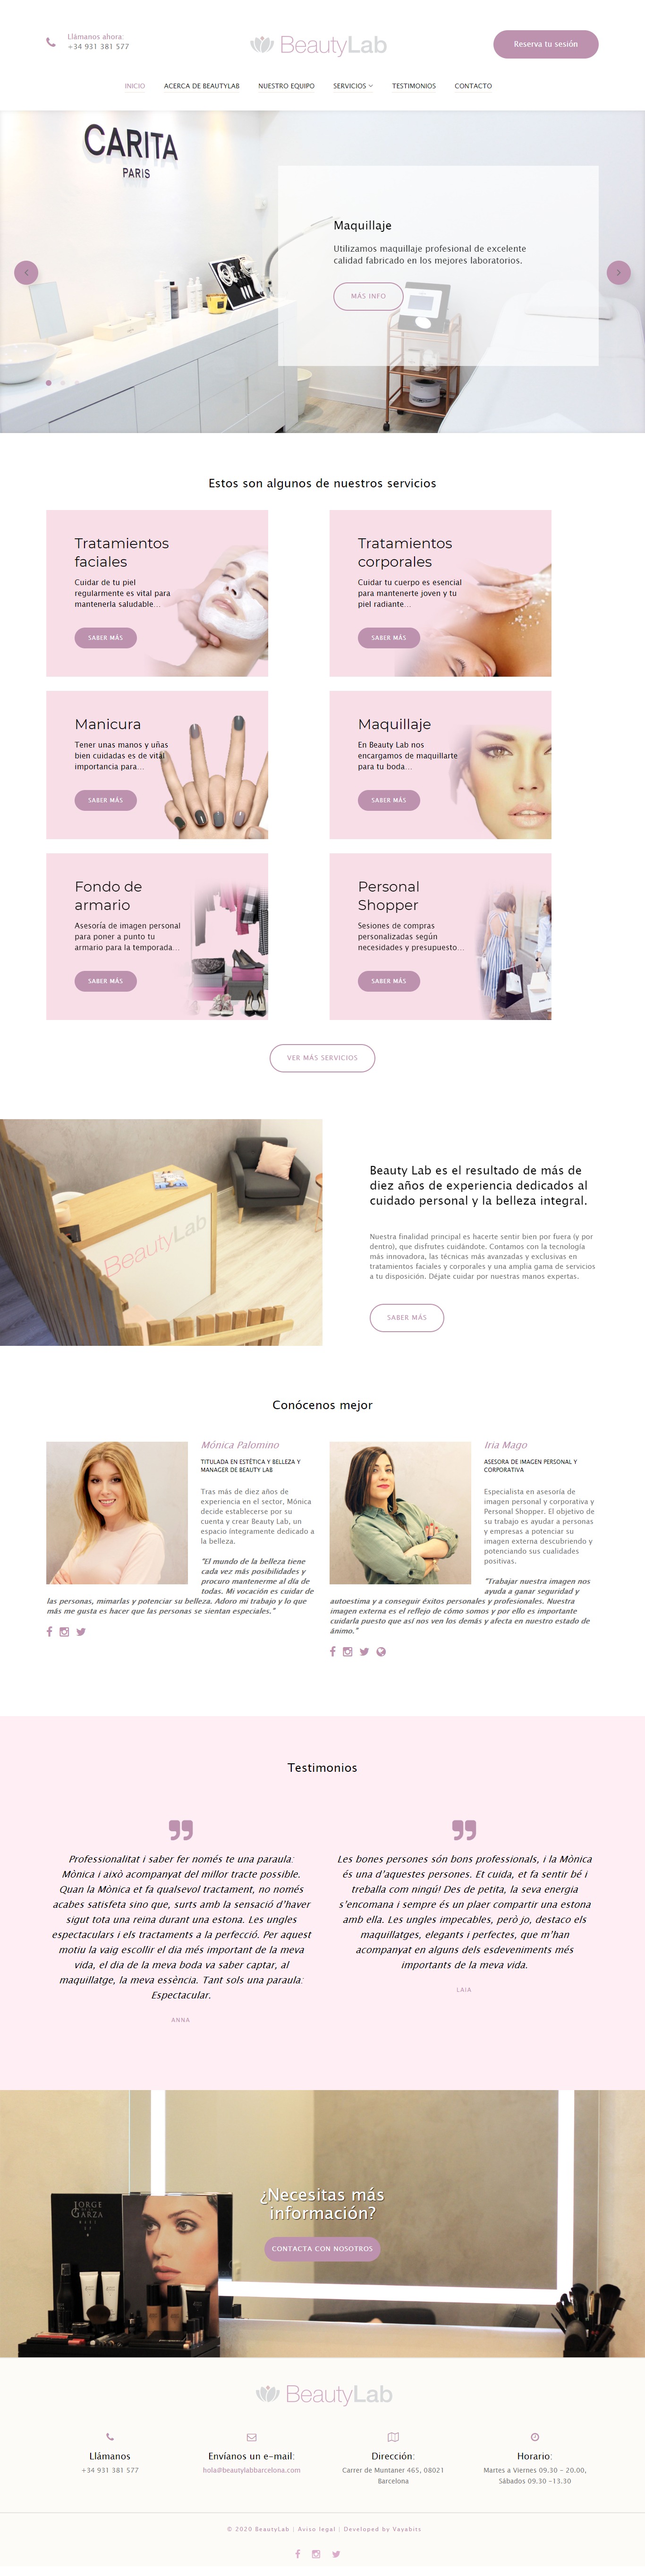 diseño web informativa beauty lab centro estética barcelona 